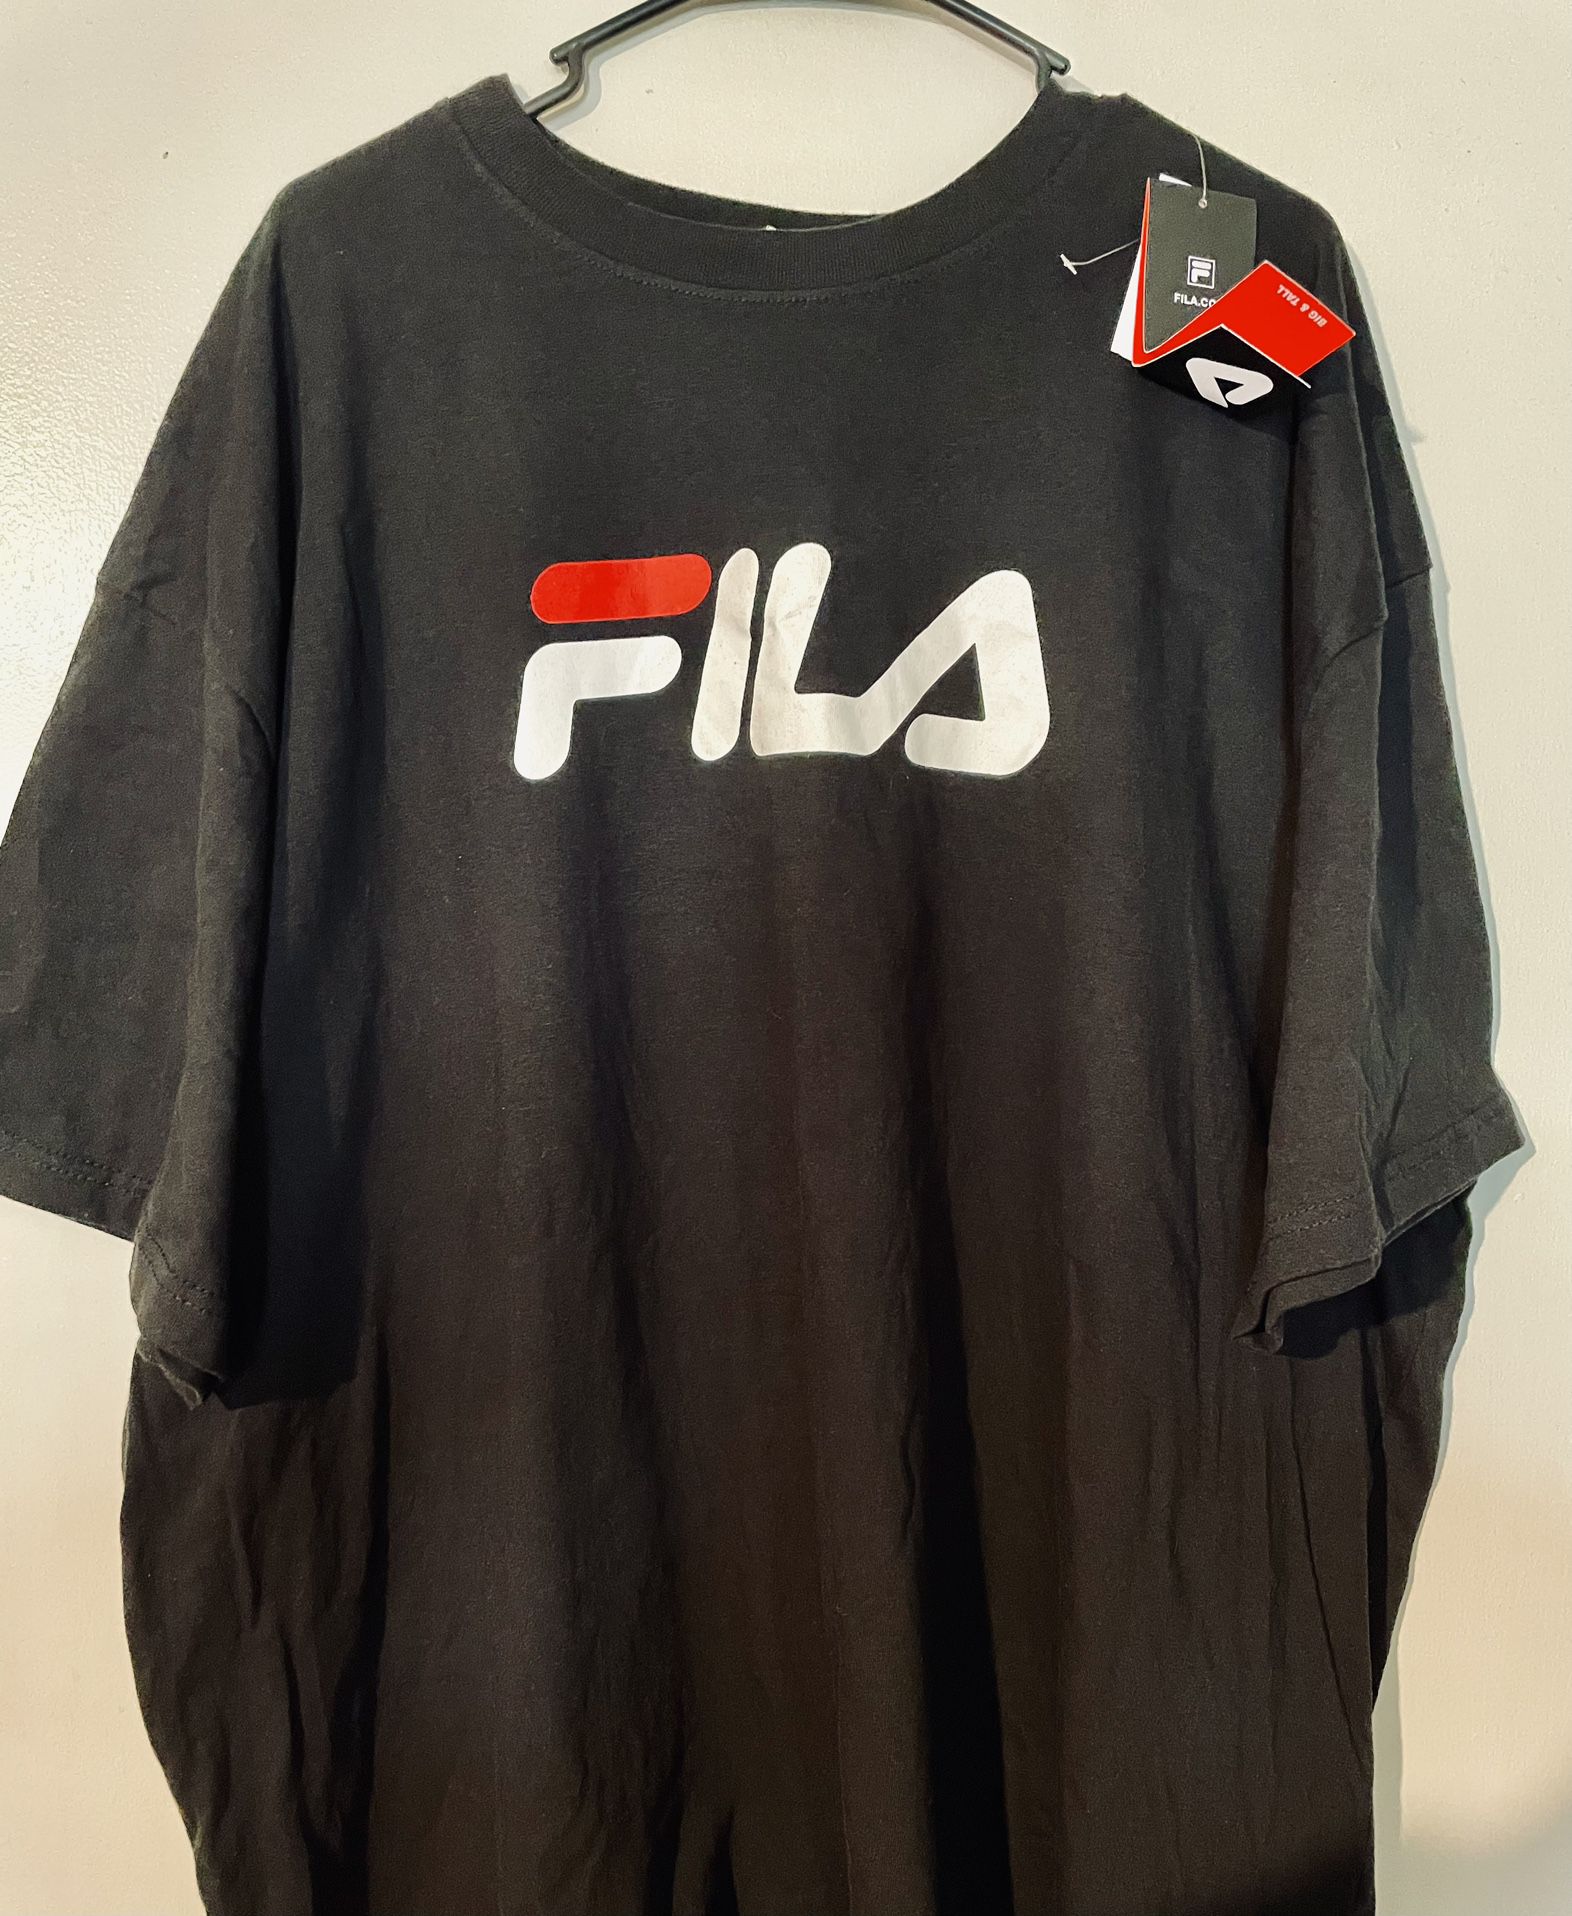 Knipperen Algebraïsch Oneffenheden Fila Shirt for Sale in Palmdale, CA - OfferUp